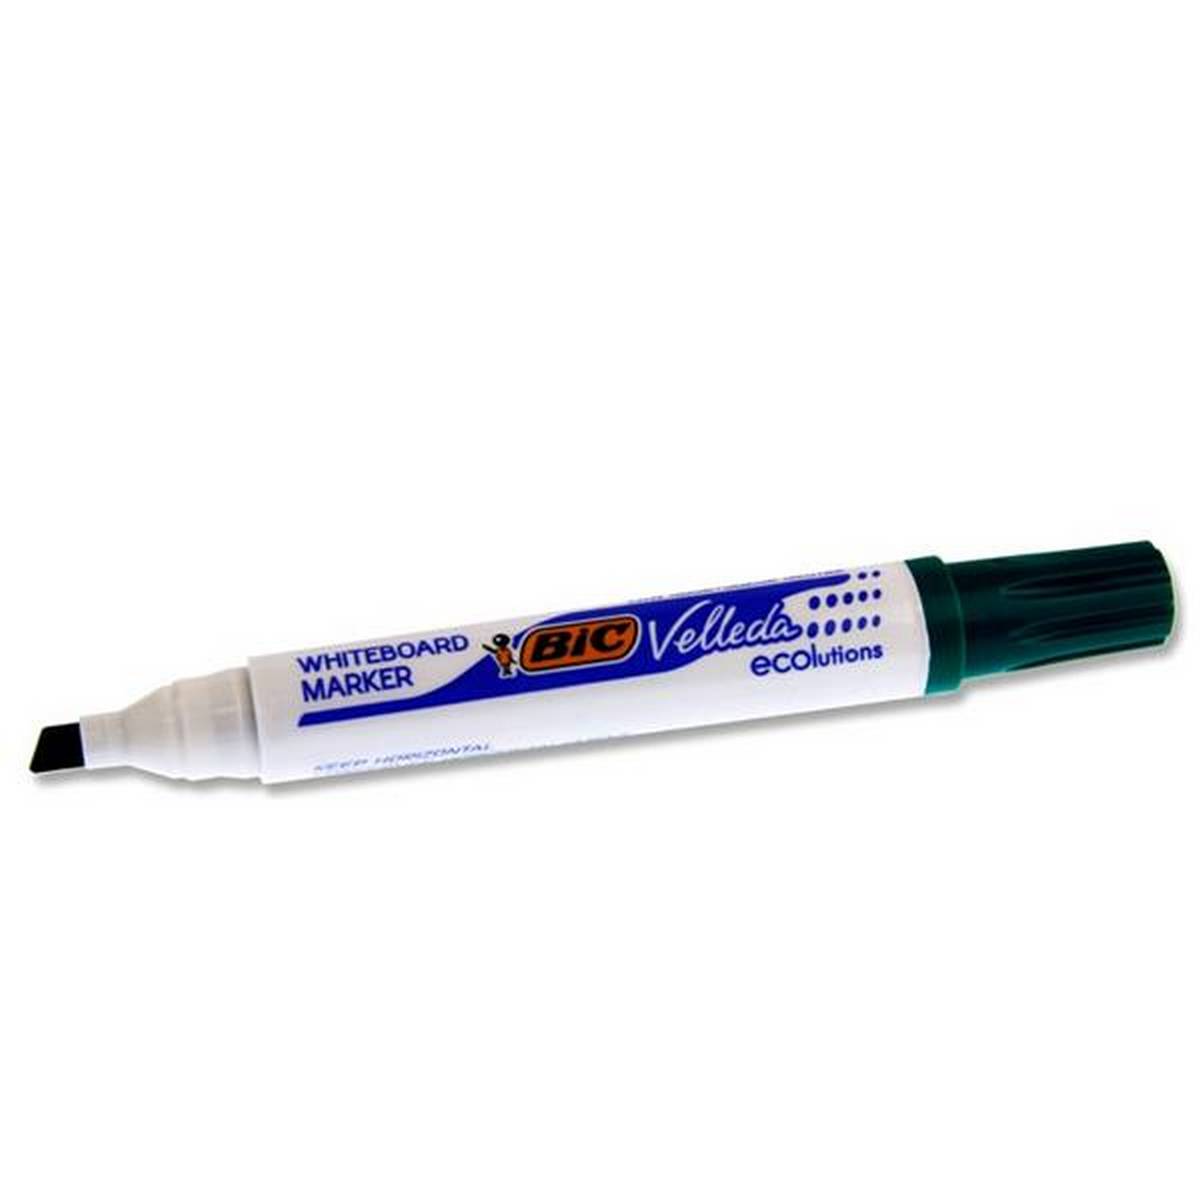 Bic Velleda 1701 Chisel Tip Whiteboard Marker Pack of 12 - Green